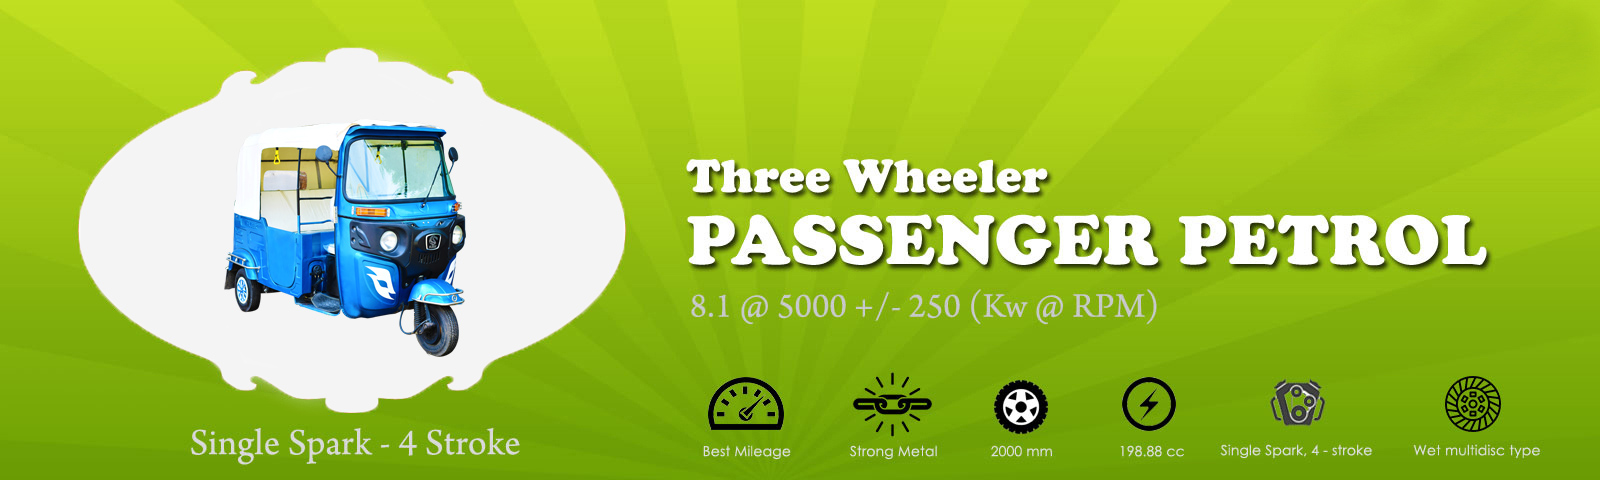 banner_Three-Wheeler-Cargo-diesel_fleek_motors